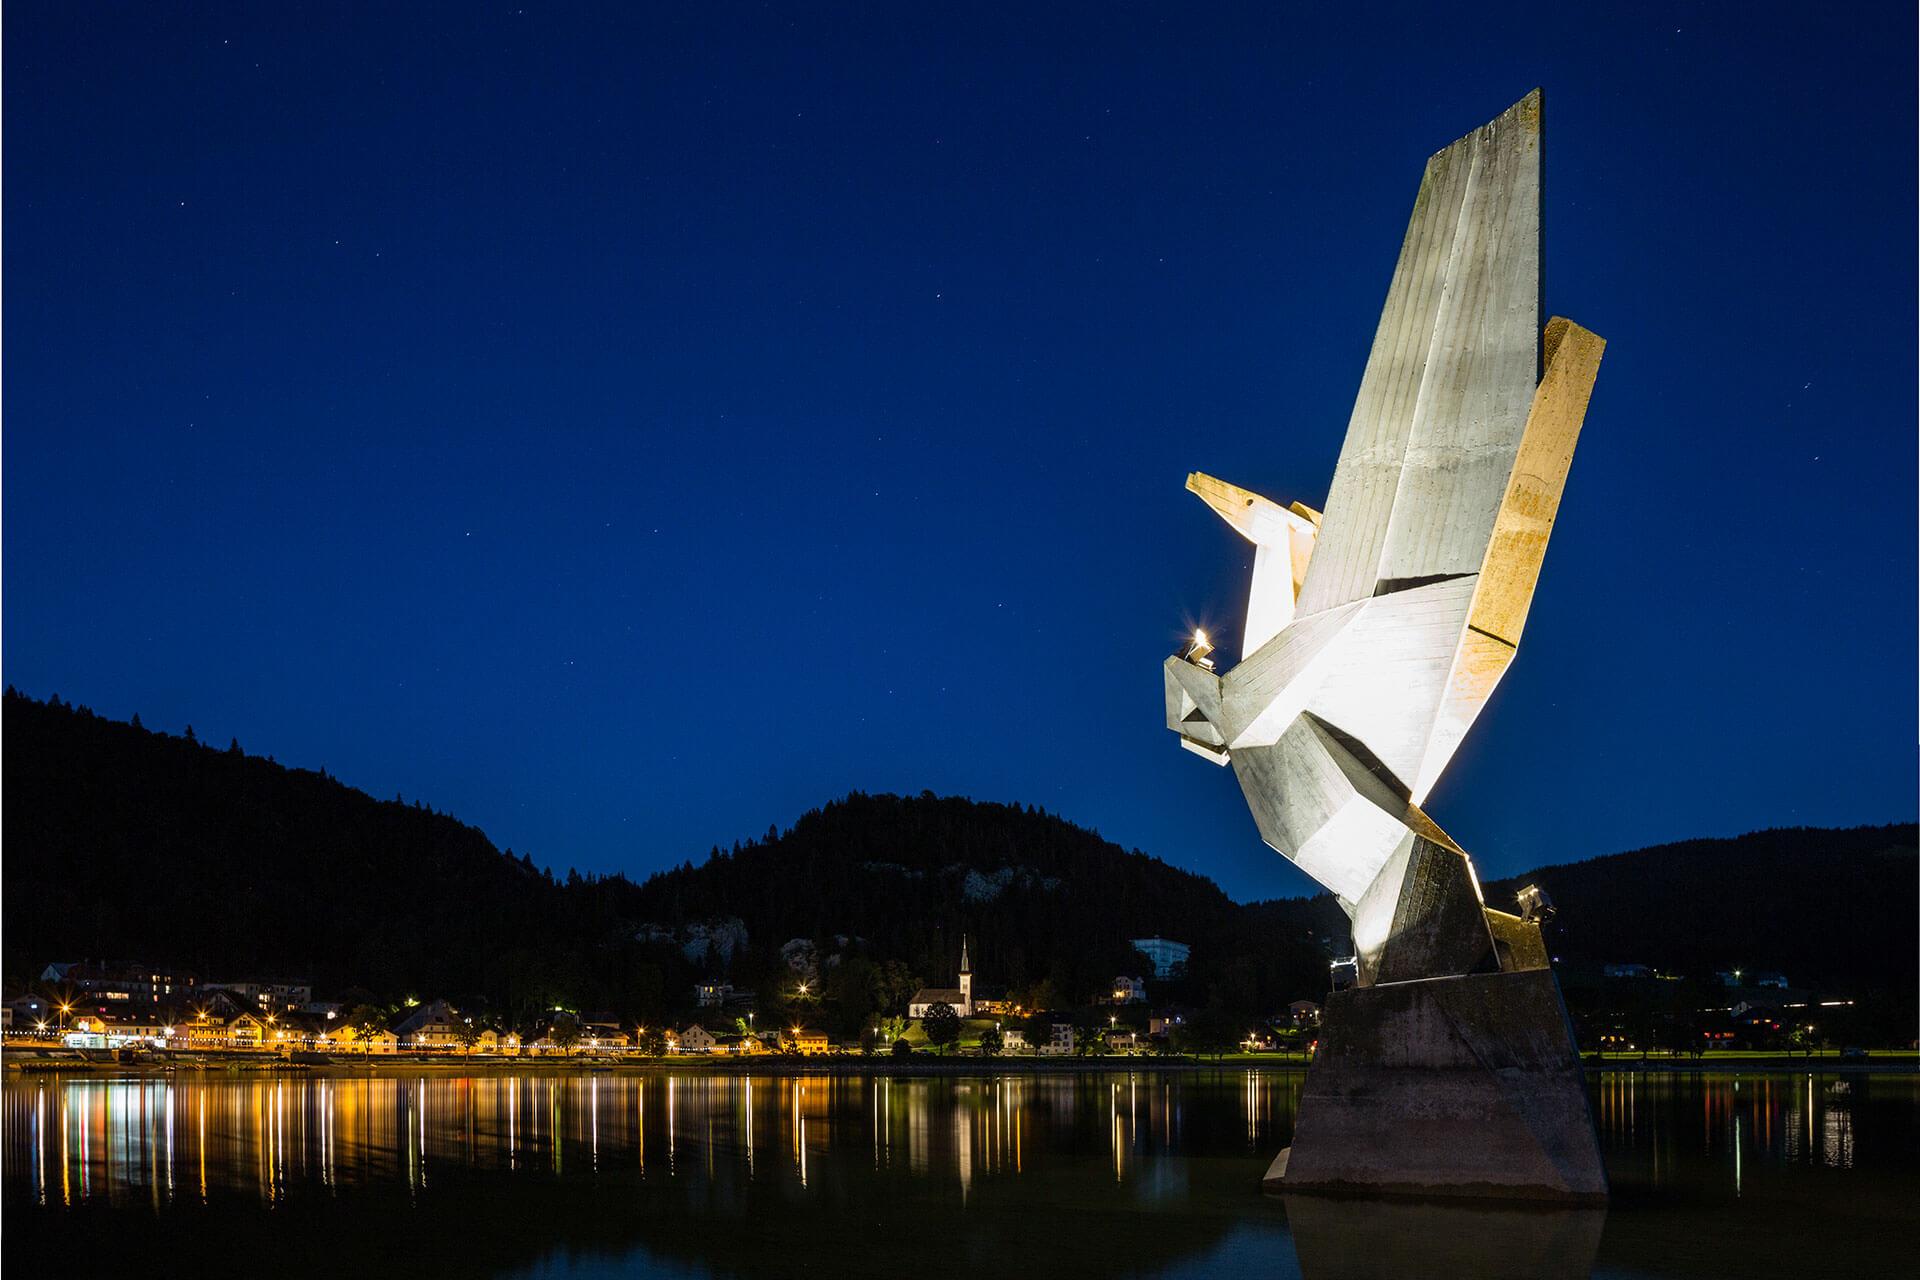 Schréder floodlights provide uniform illumination to enhance this iconic statue for locals